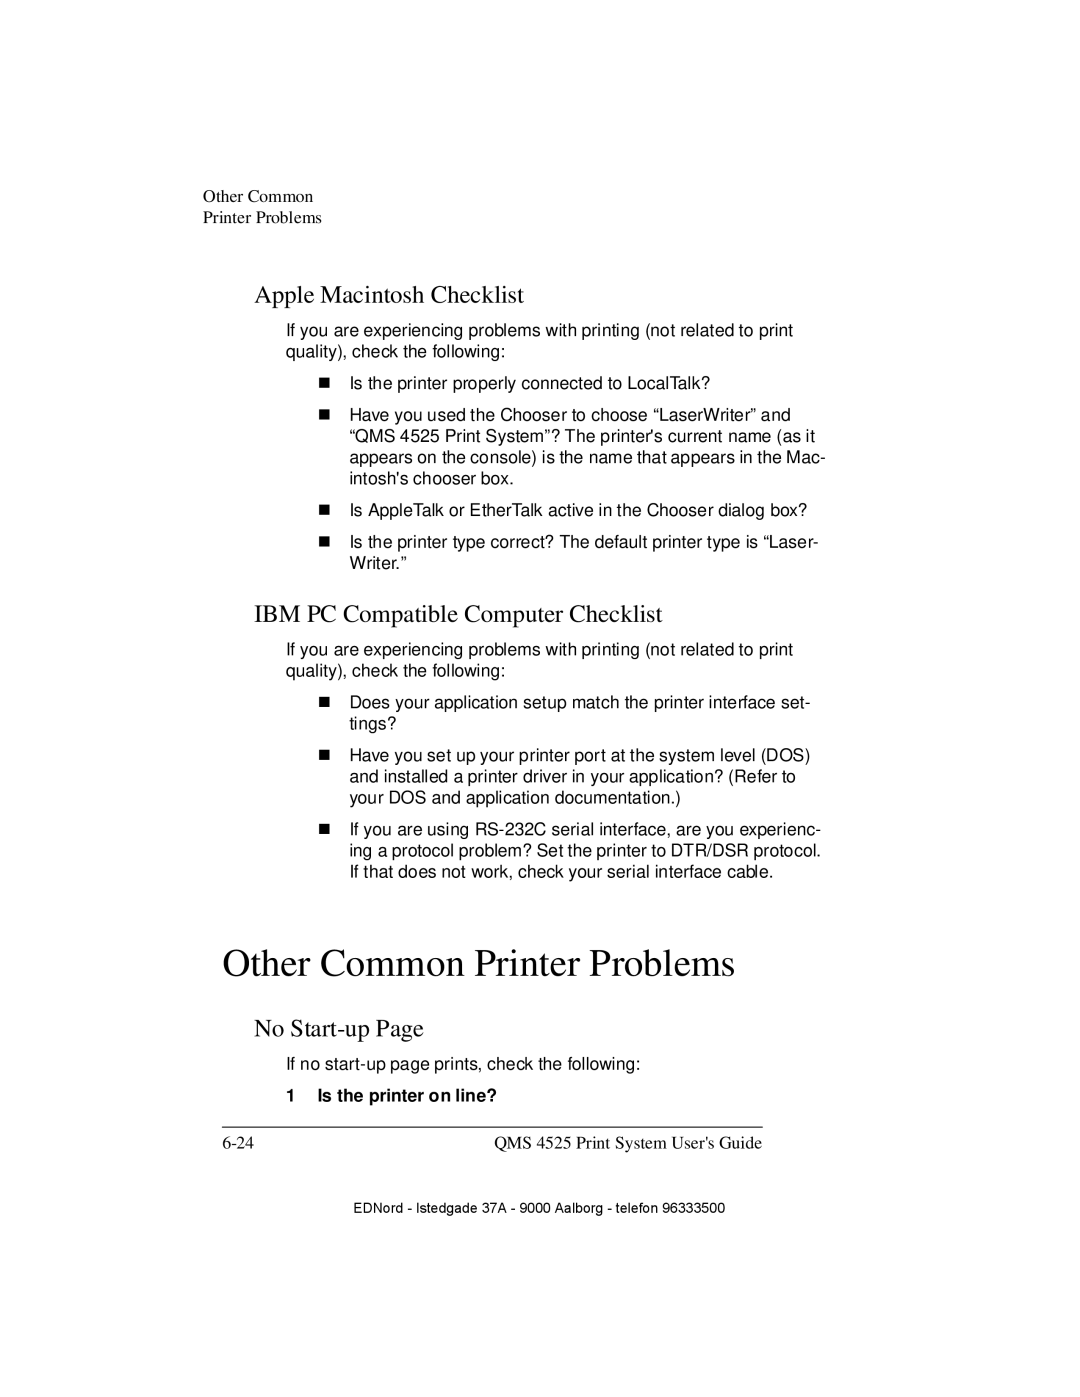 IBM QMS 4525 manual Other Common Printer Problems, Apple Macintosh Checklist, IBM PC Compatible Computer Checklist 